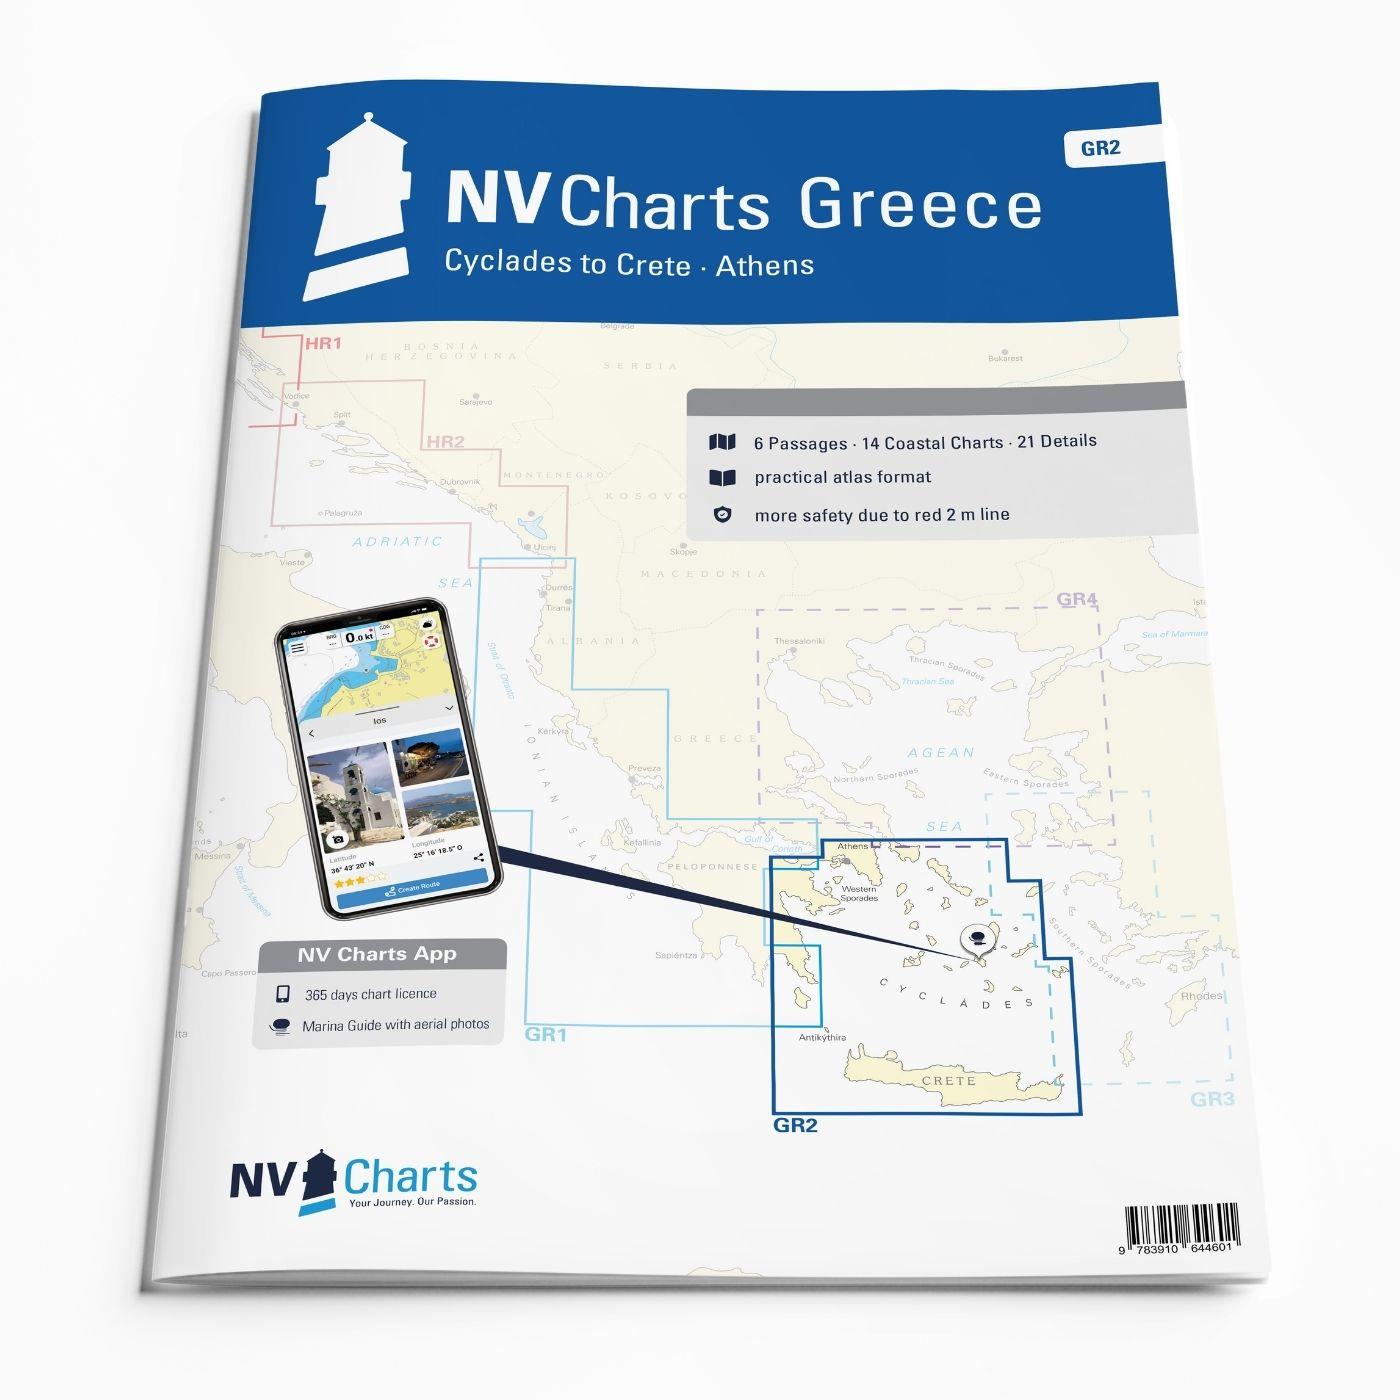 NV NV Charts Greece GR2 - Griechenland Kykladen bis Kreta & Athen